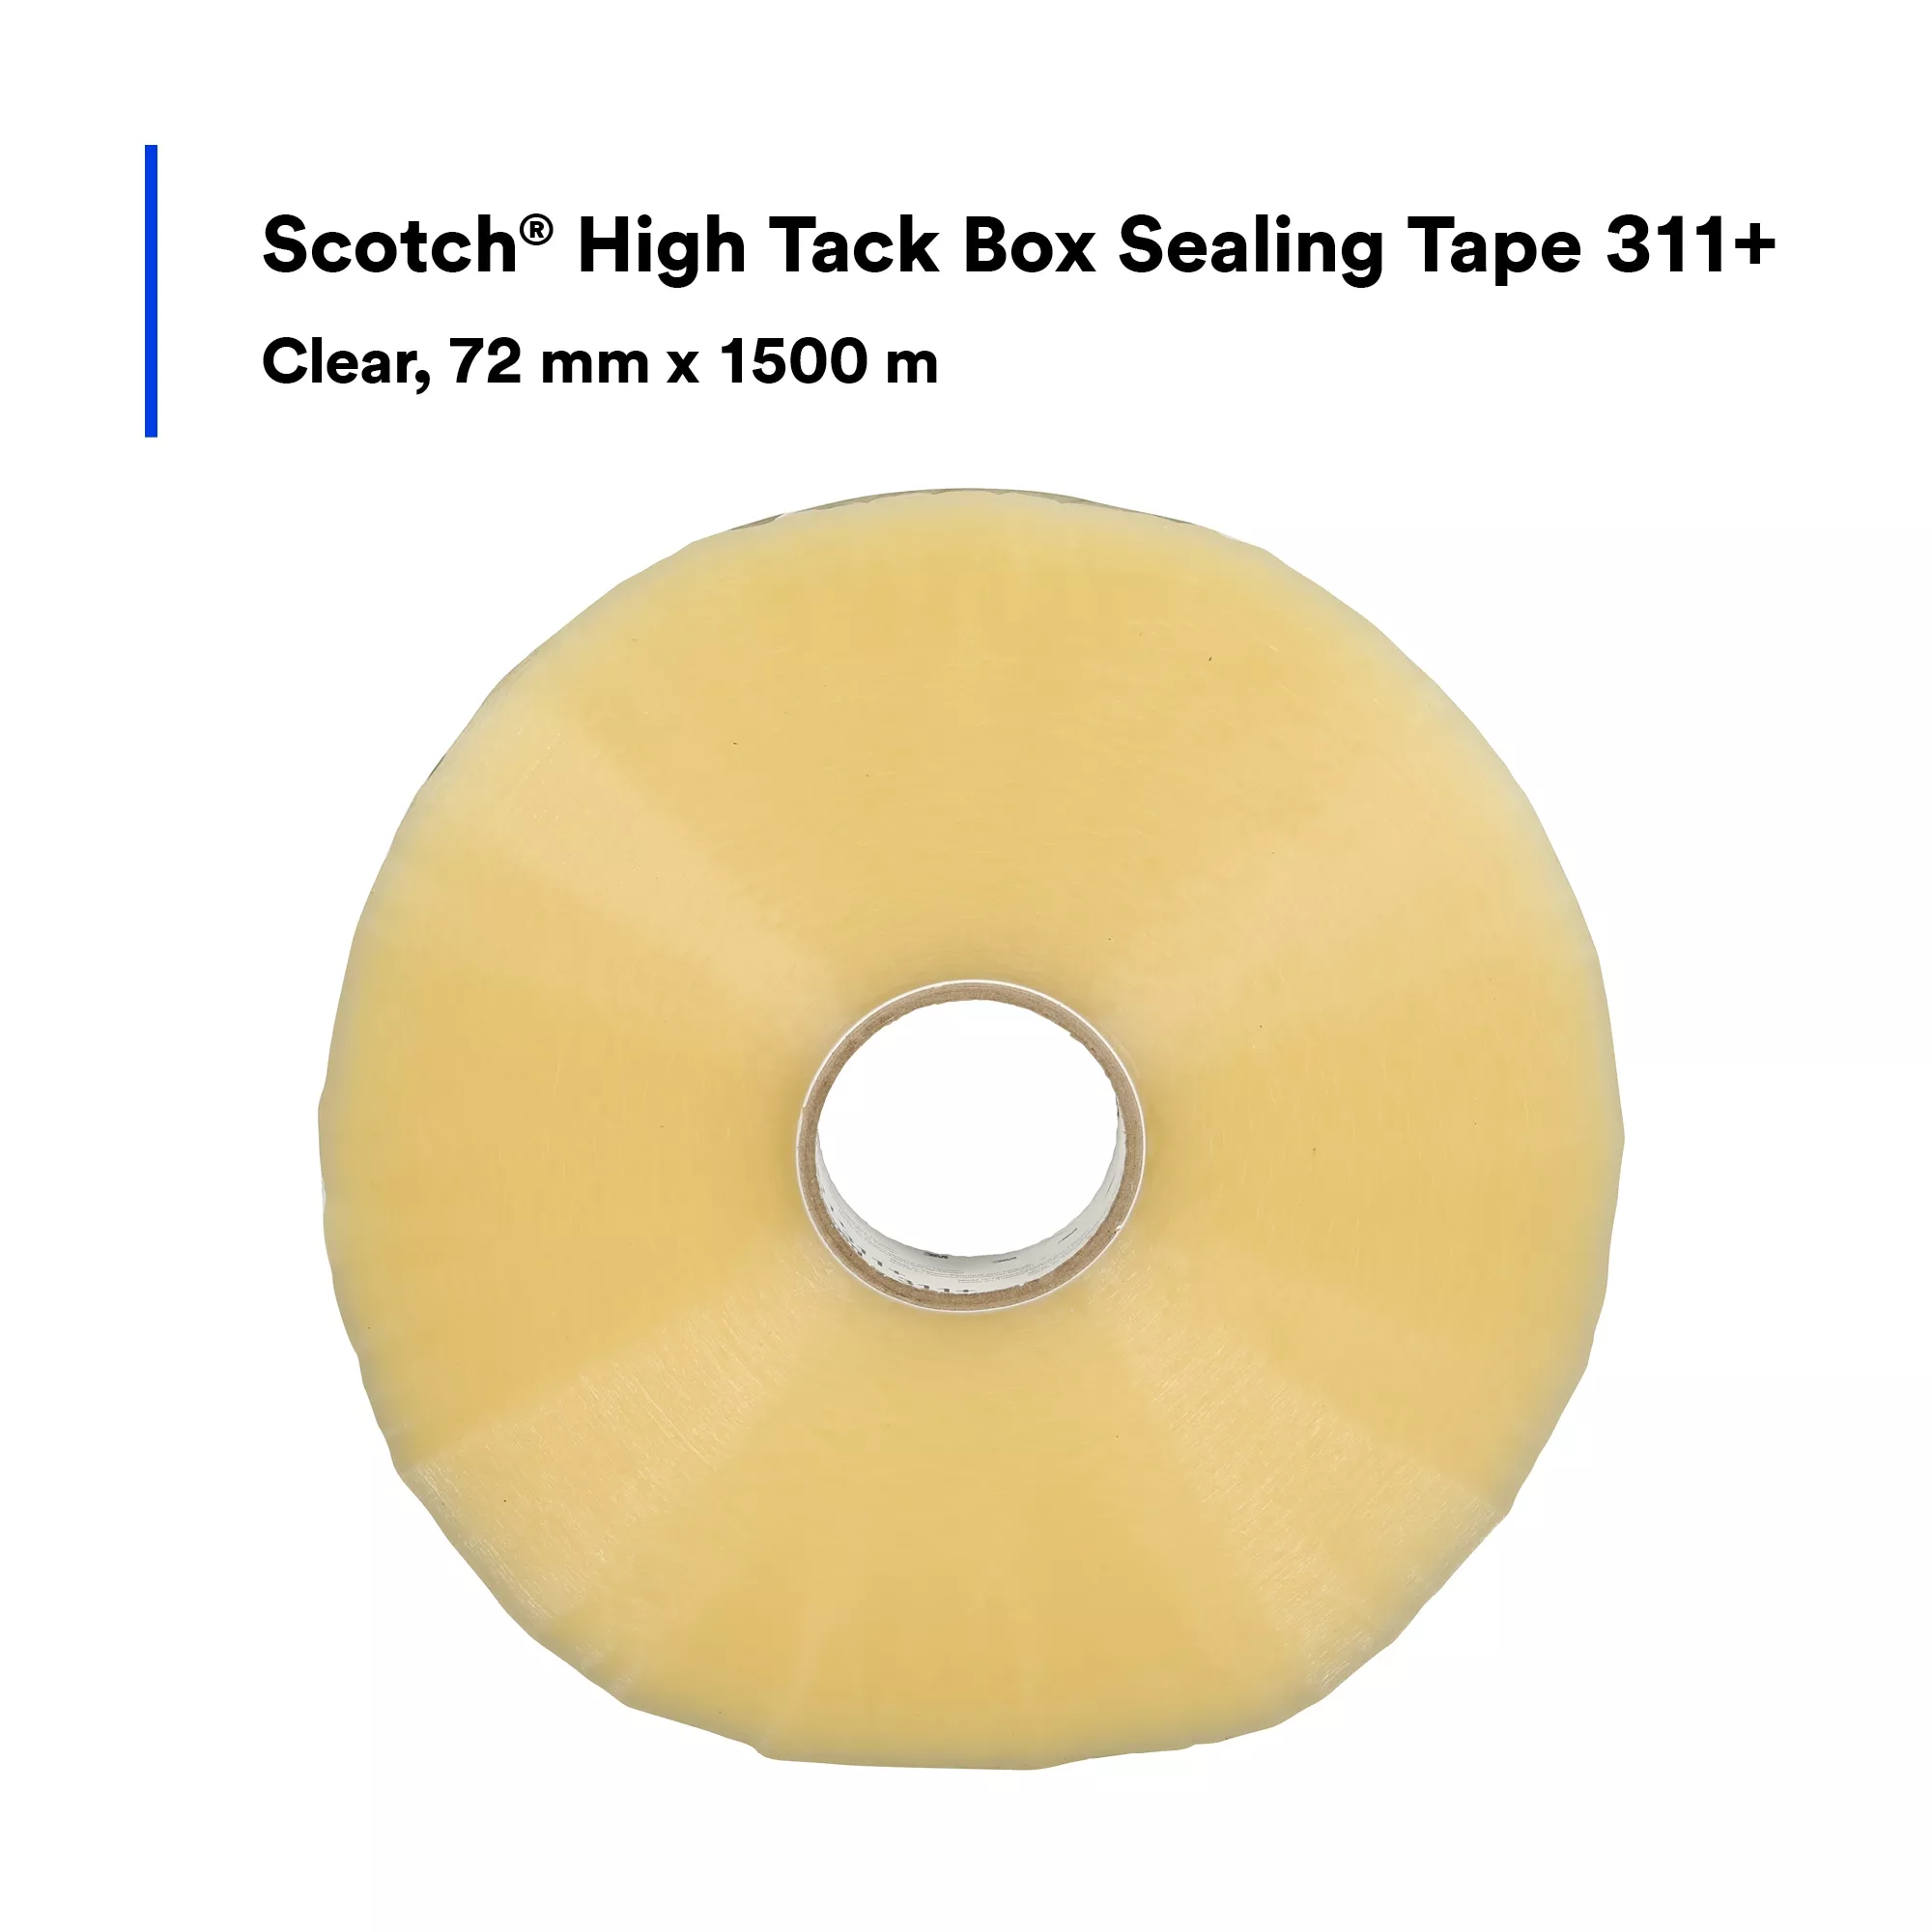 SKU 7100253857 | Scotch® High Tack Box Sealing Tape 311+